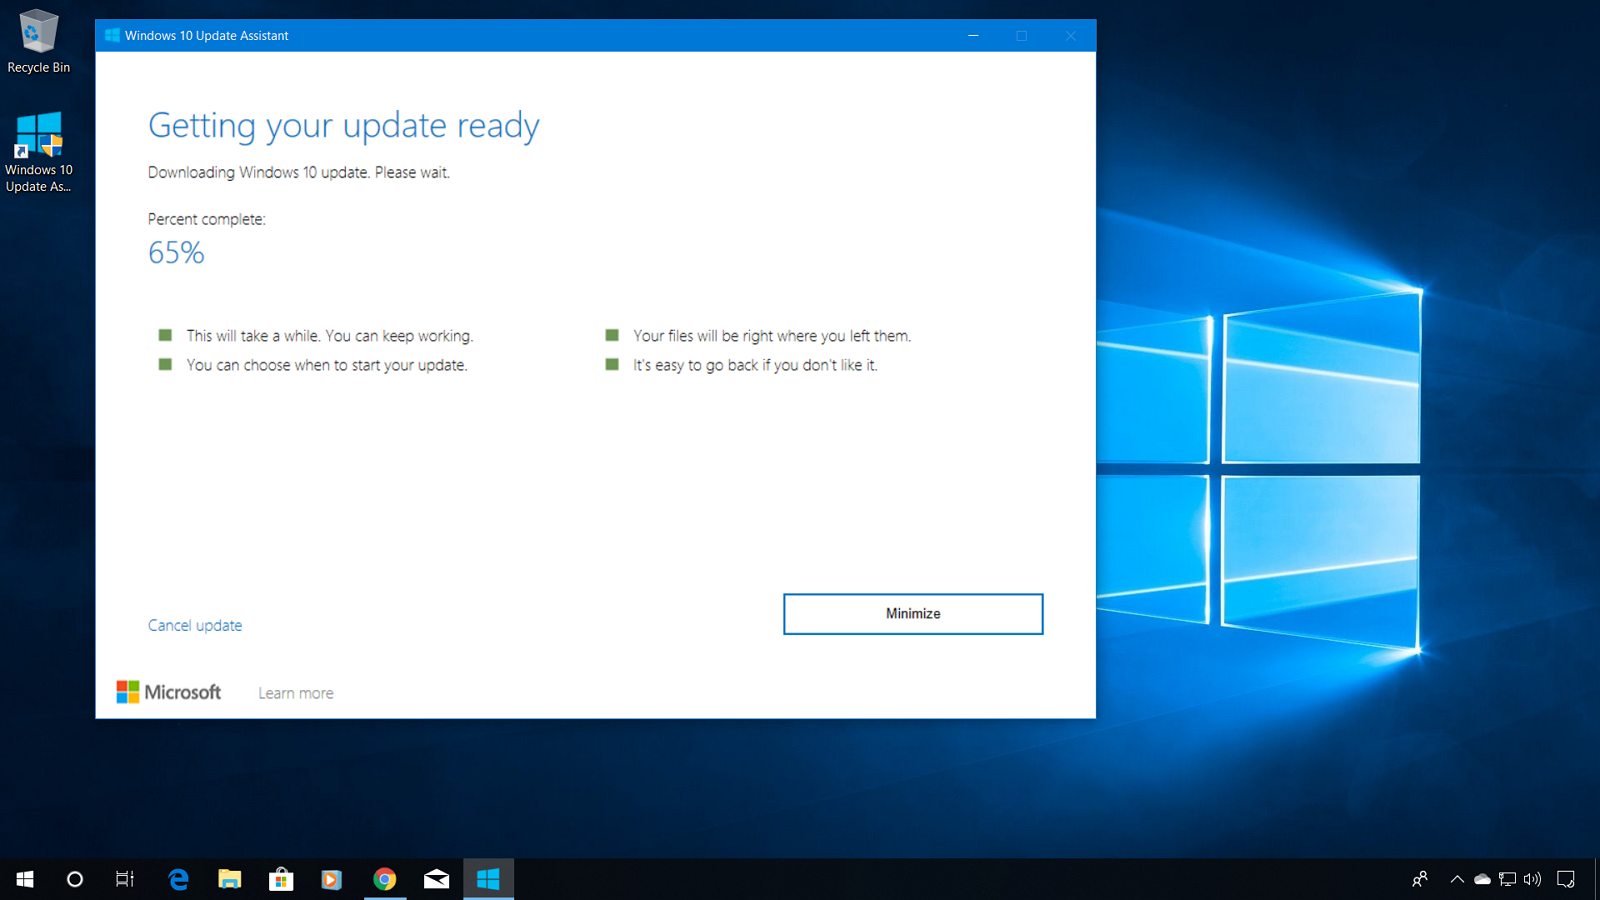 Windows 10 1909 Update Assistant